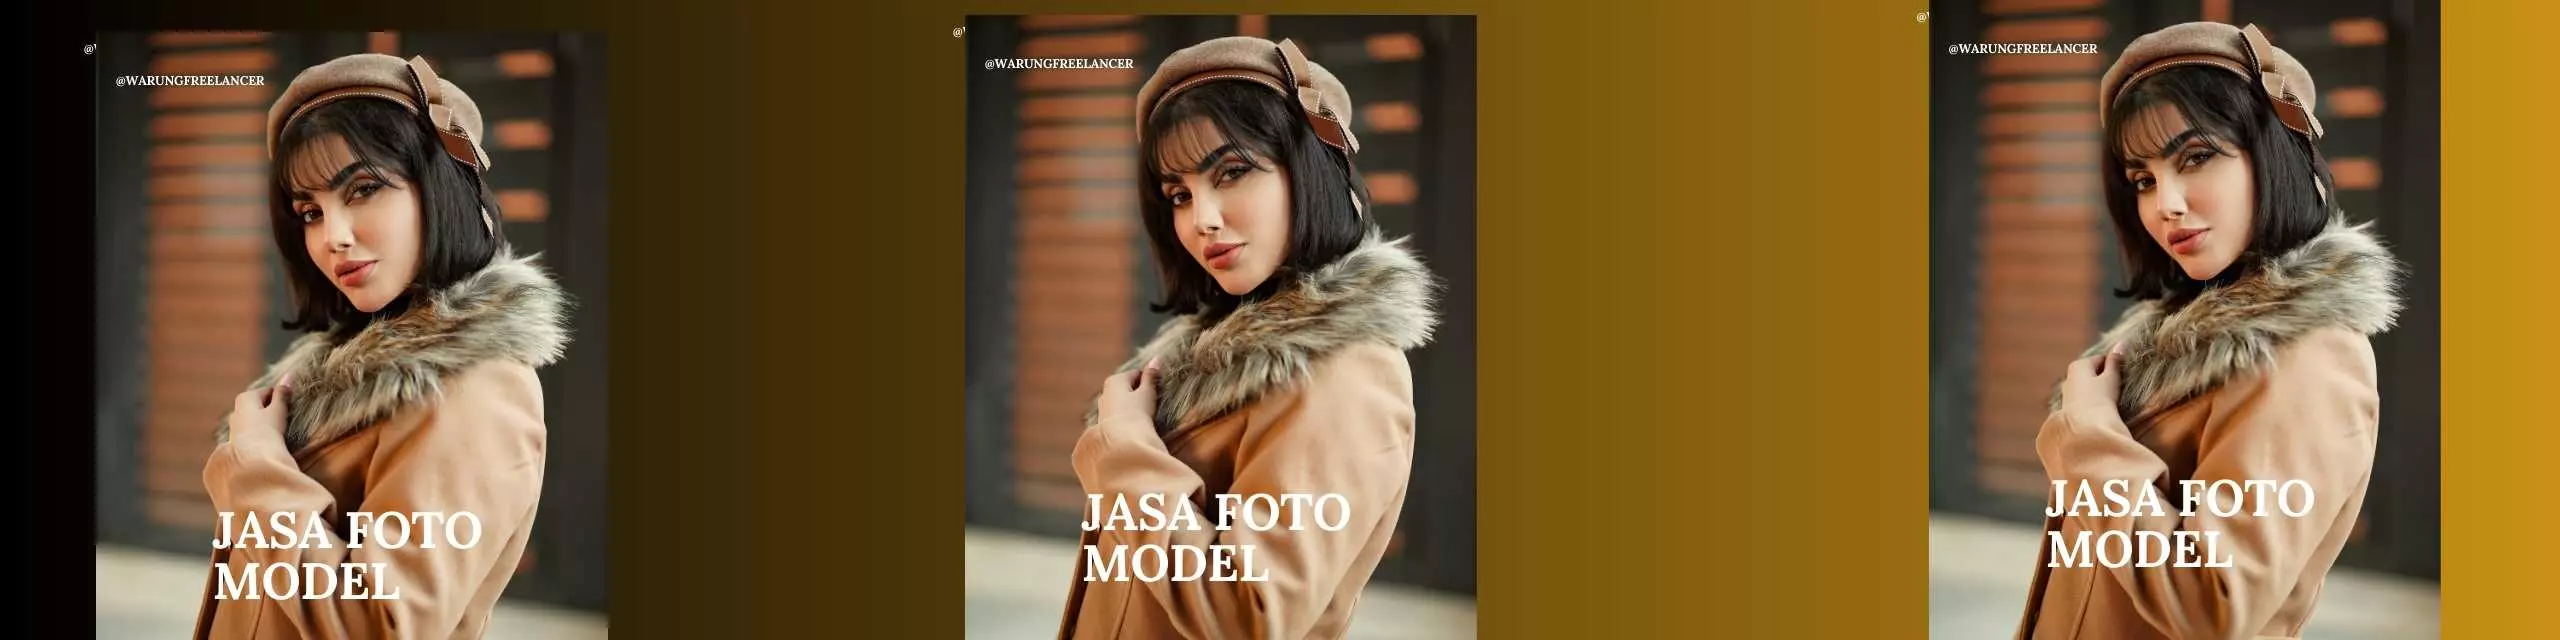 Jasa Foto Model